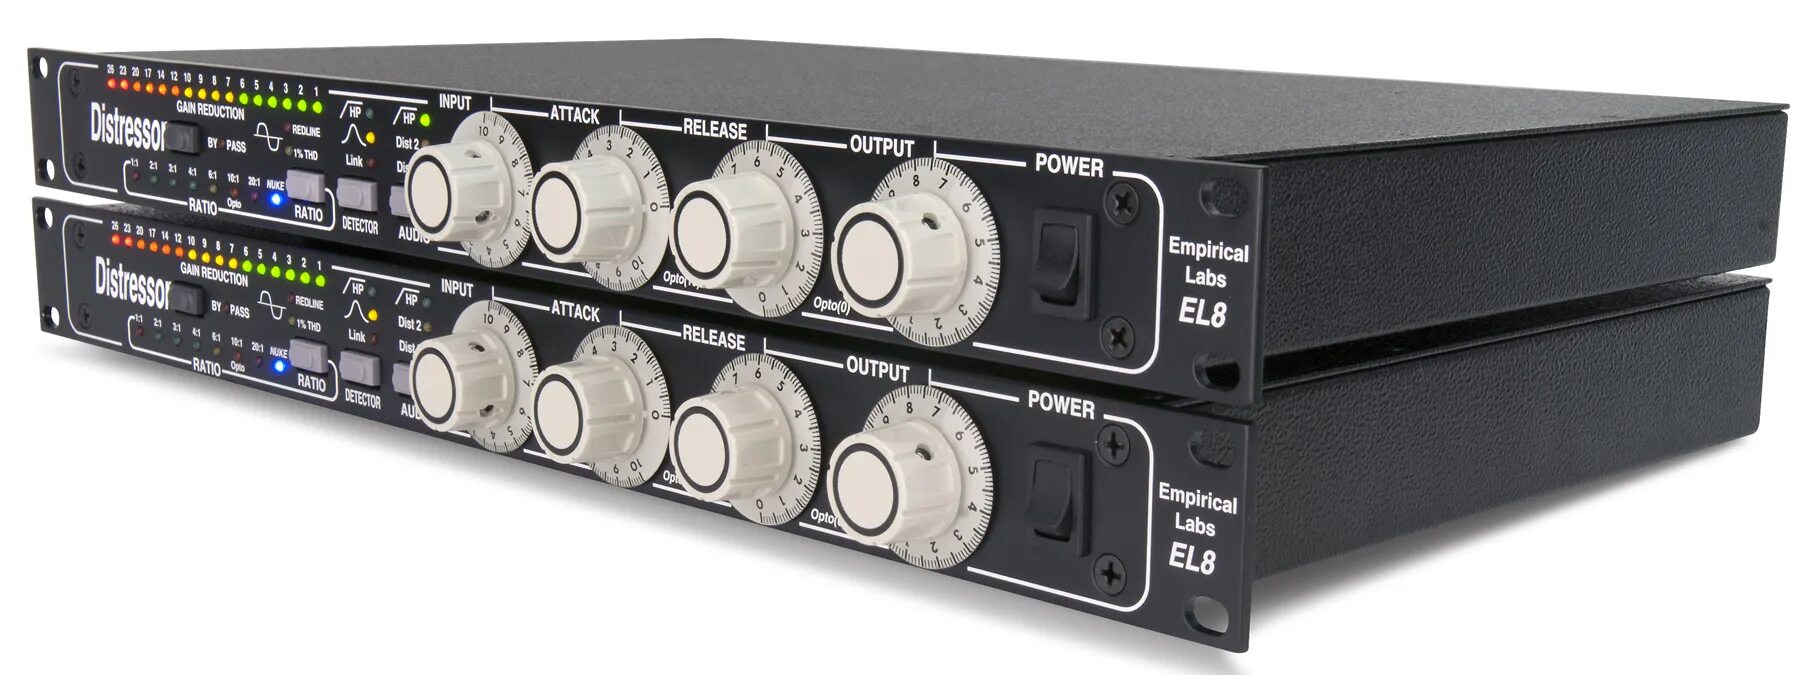 Empirical Labs el8x Distressor. Distressor Compressor. Universal Audio empirical Labs Distressor. Знаменитый компрессор Distressor. Power released